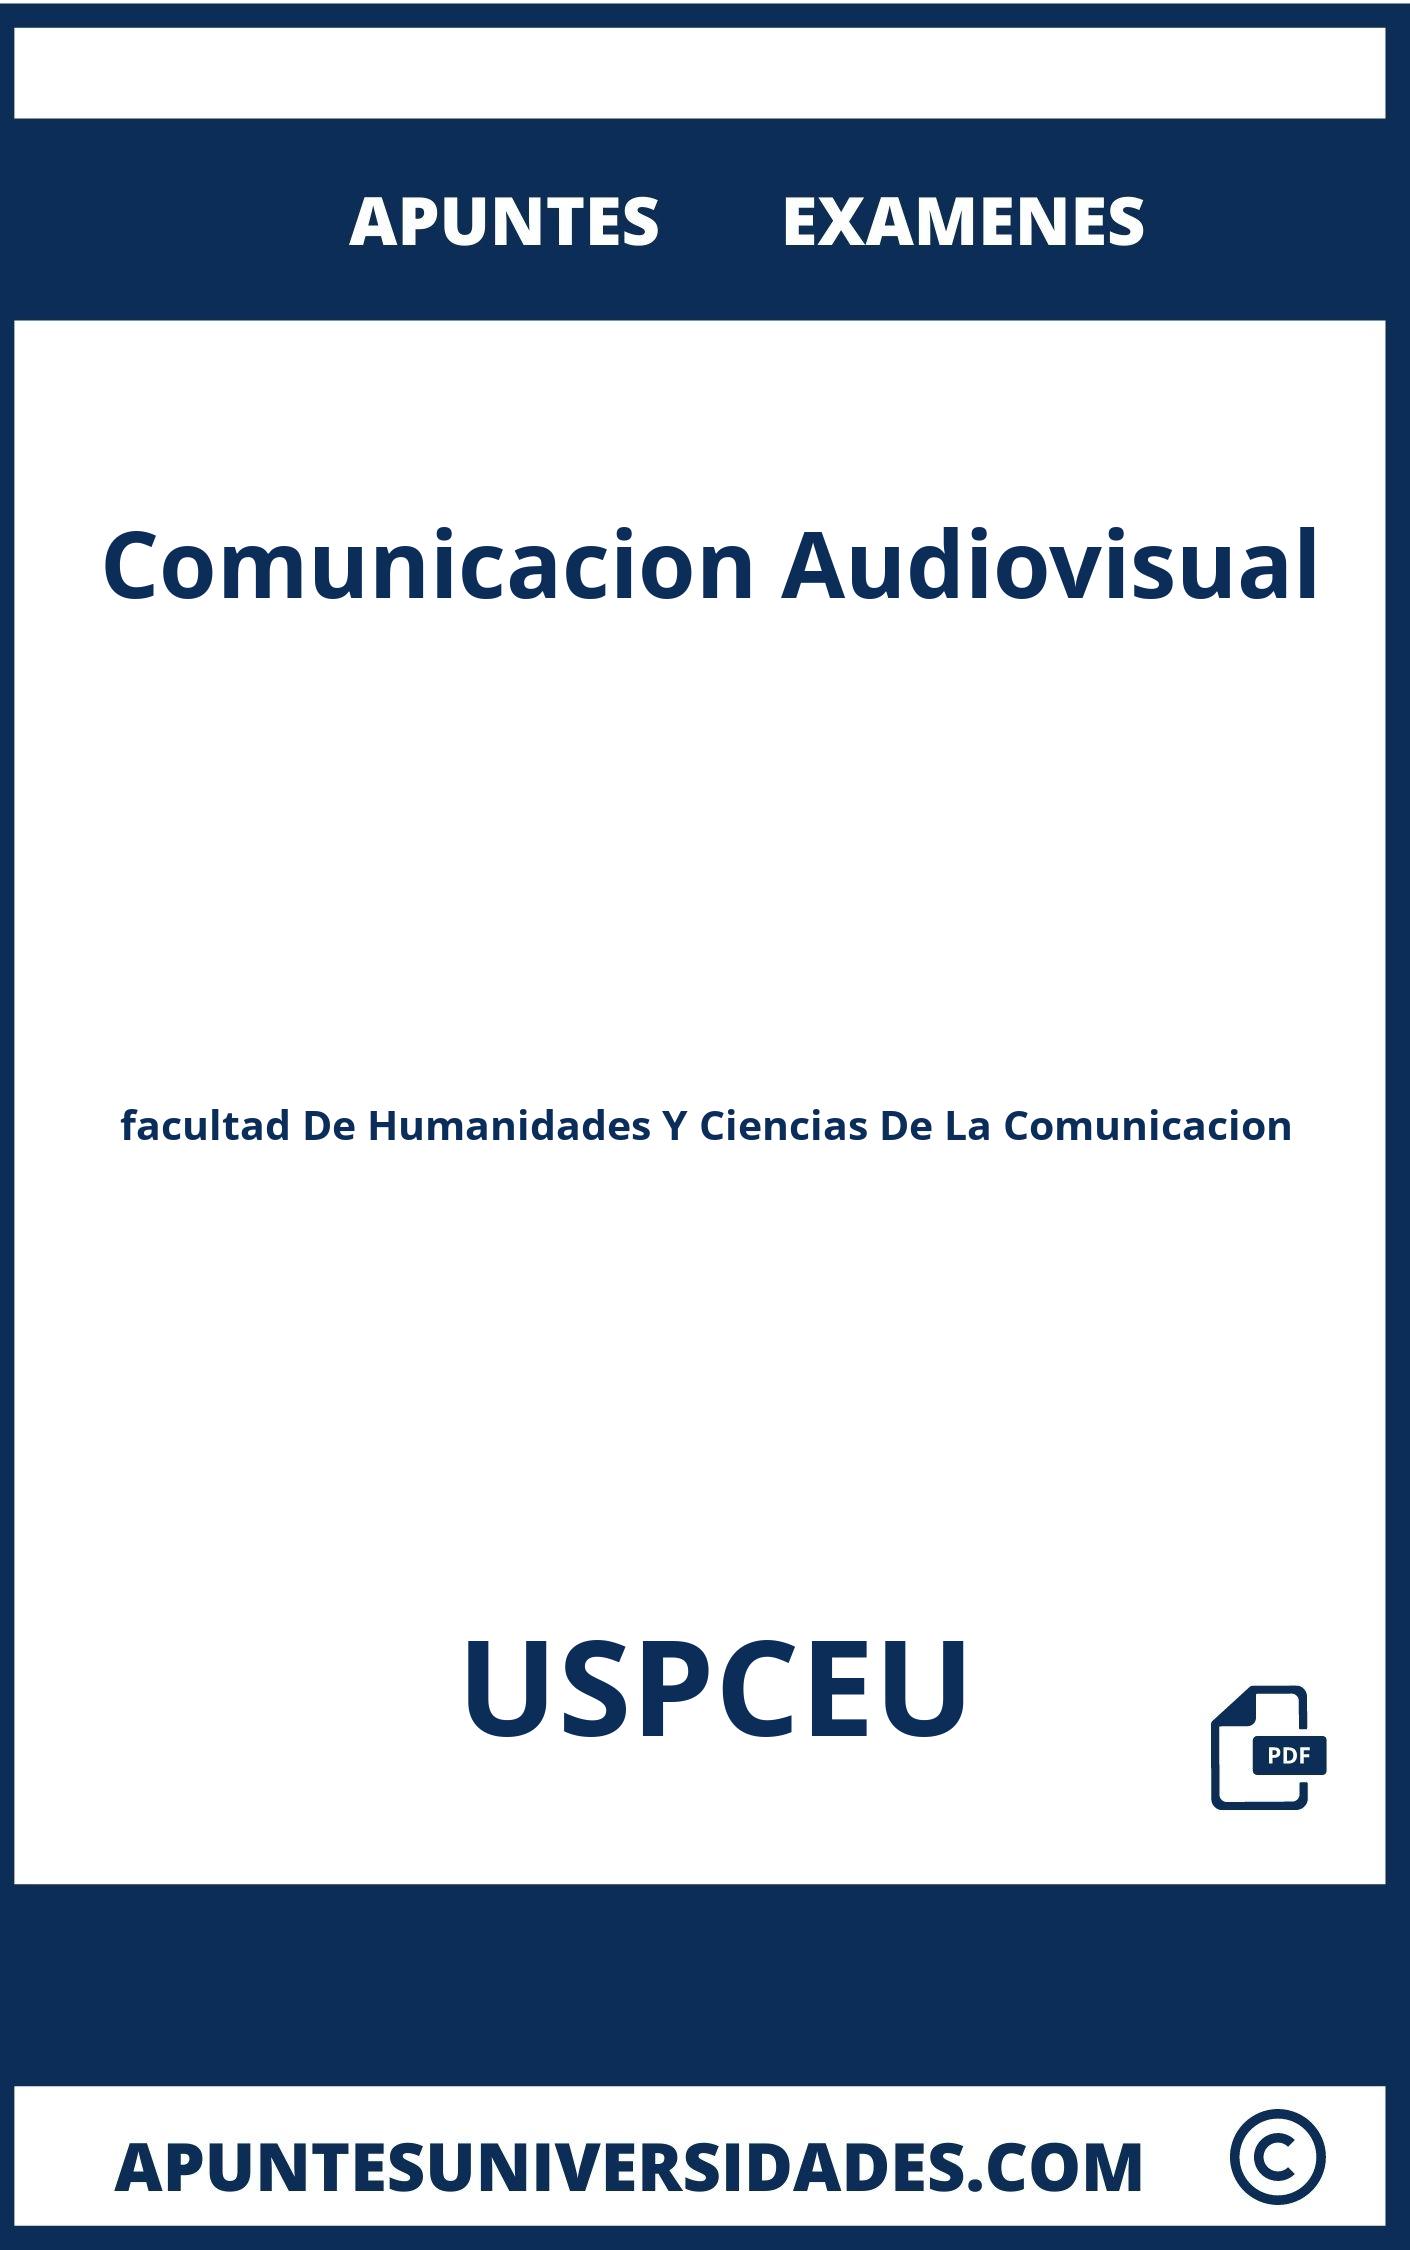 Apuntes Examenes Comunicacion Audiovisual USPCEU